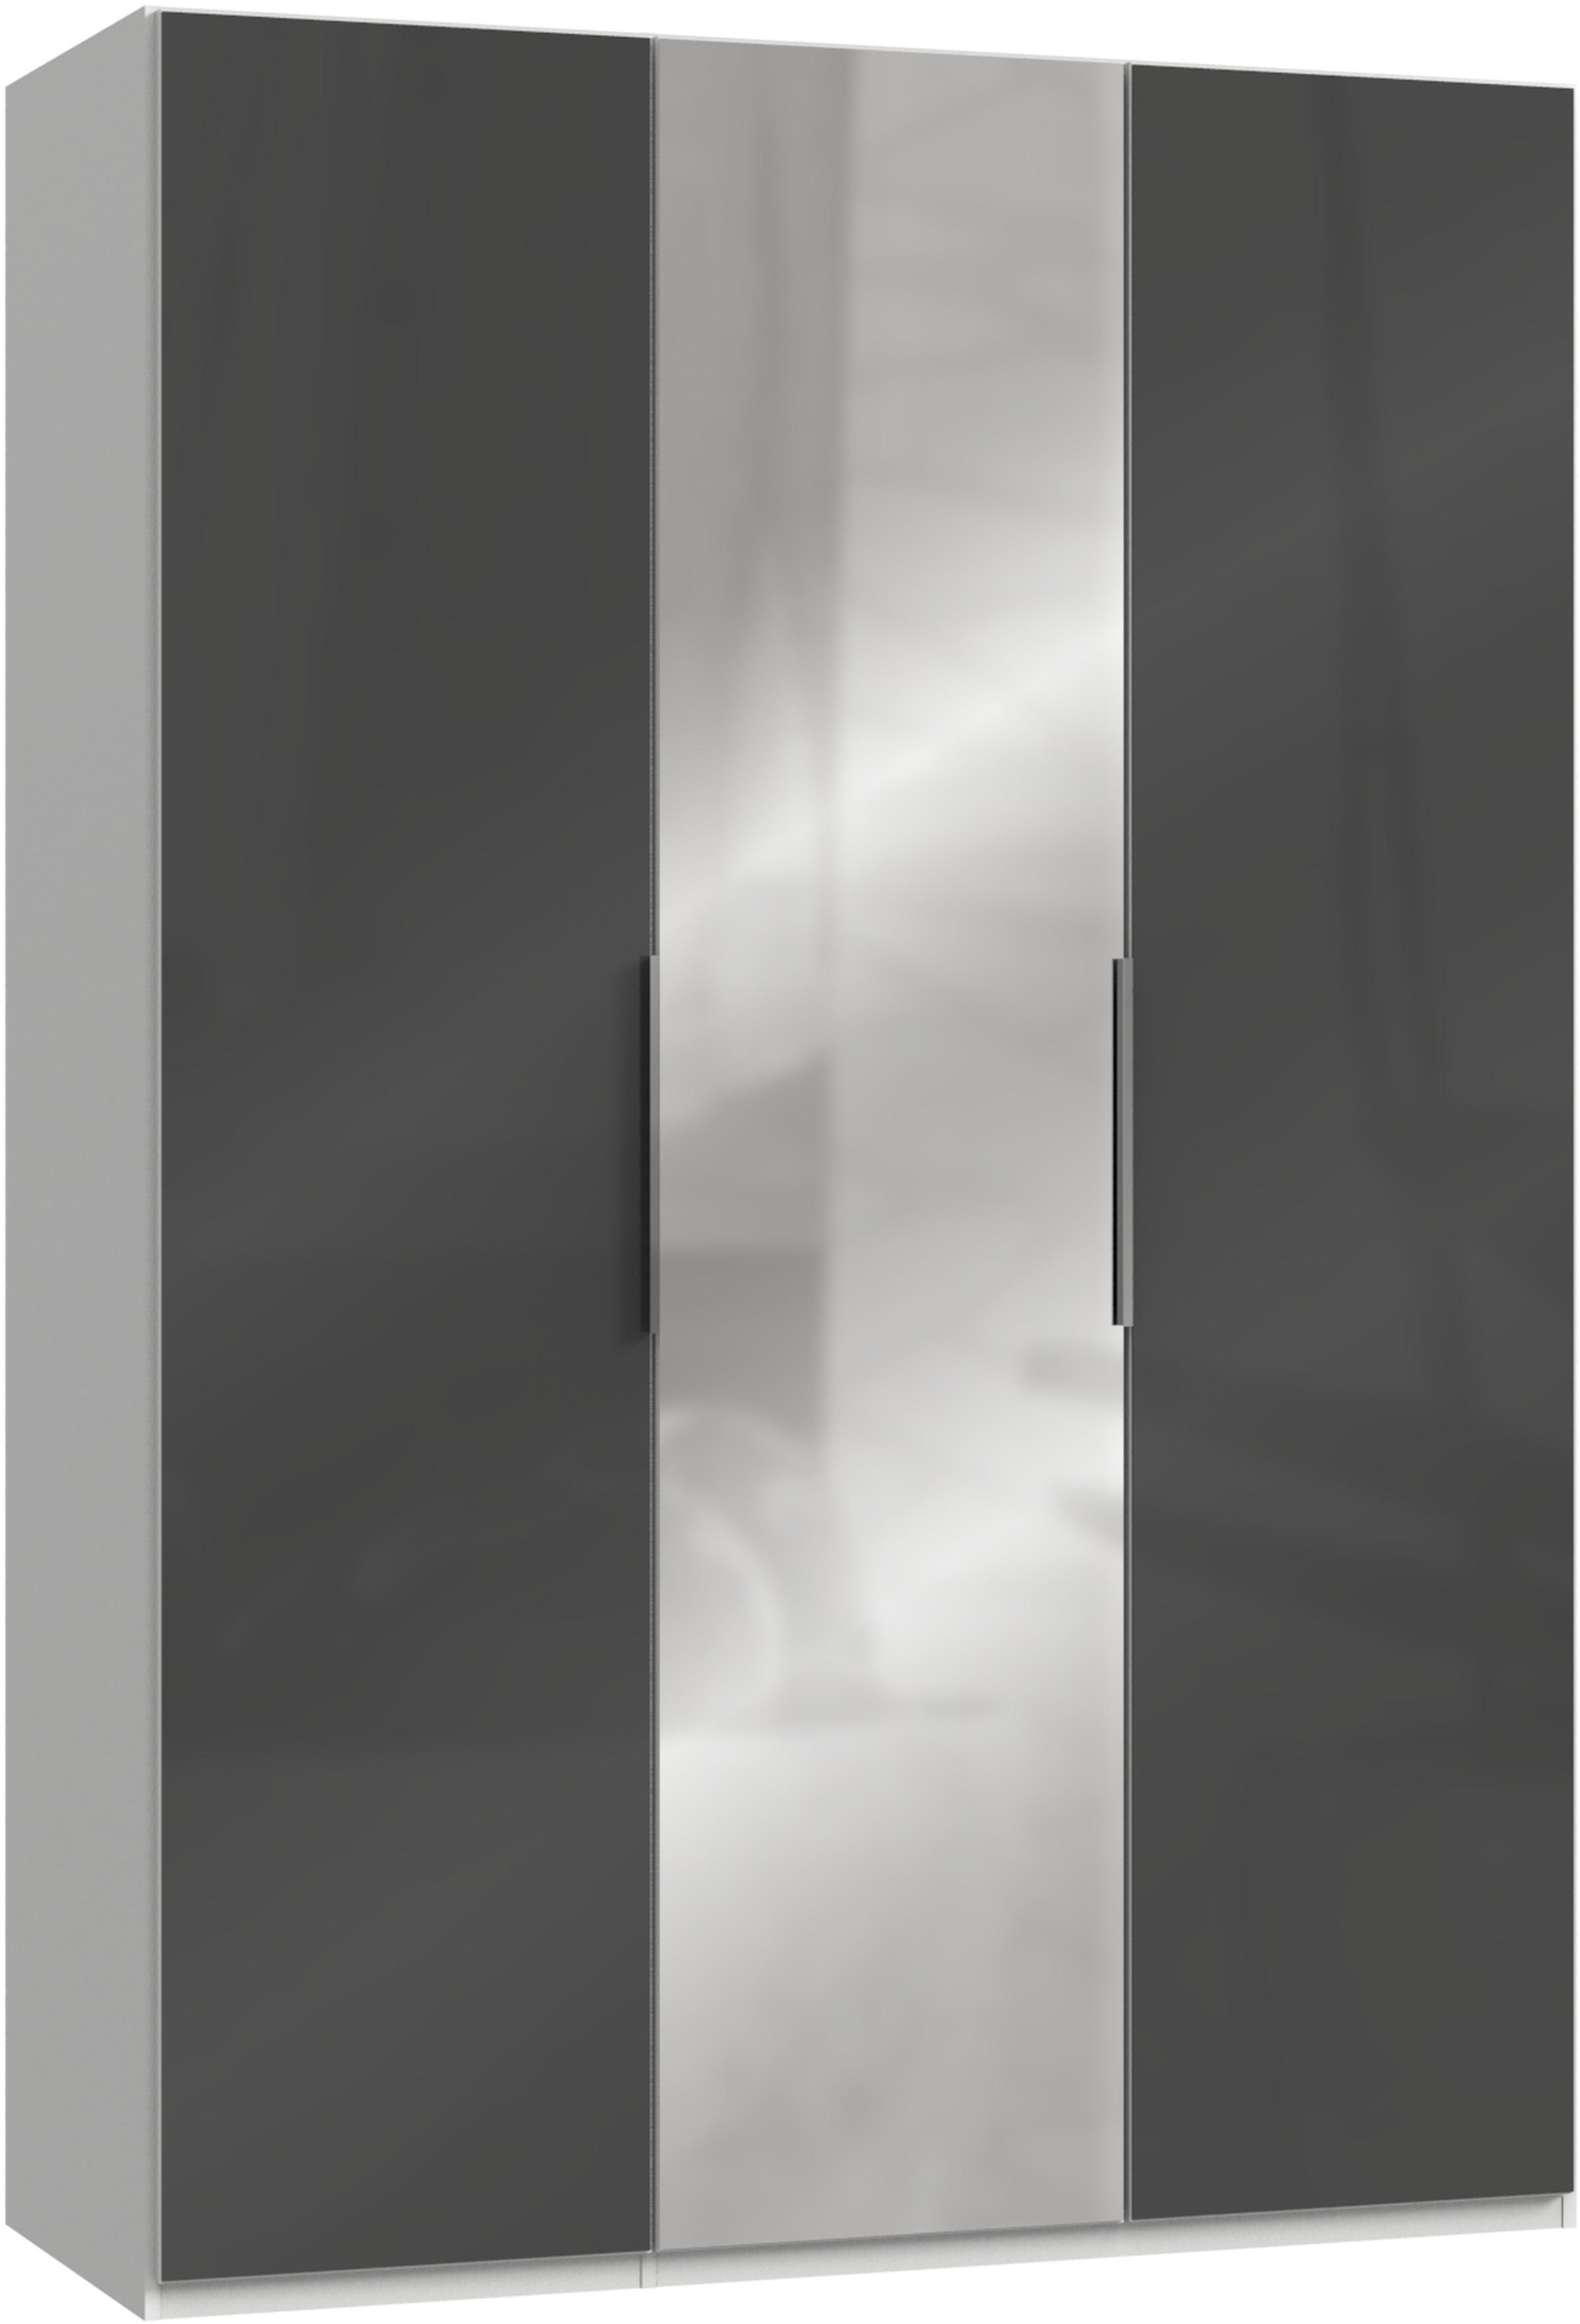 DREHTÜRENSCHRANK 3-türig Grau, Weiß  - Chromfarben/Weiß, MODERN, Holzwerkstoff/Metall (150/216/58cm) - MID.YOU